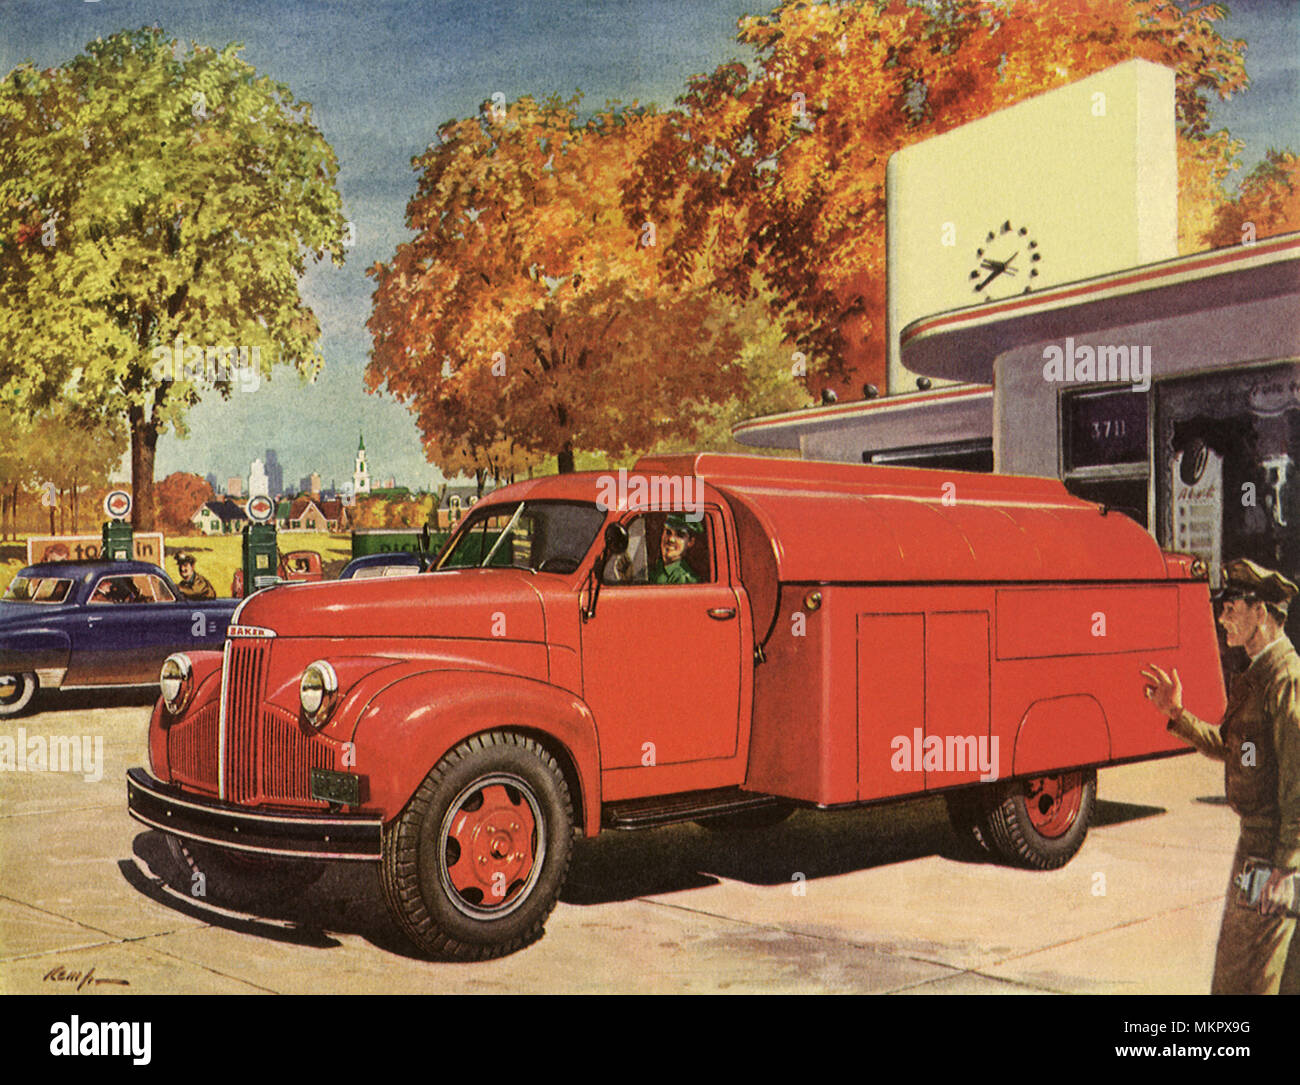 1947 Studebaker Utility Truck Stock Photo